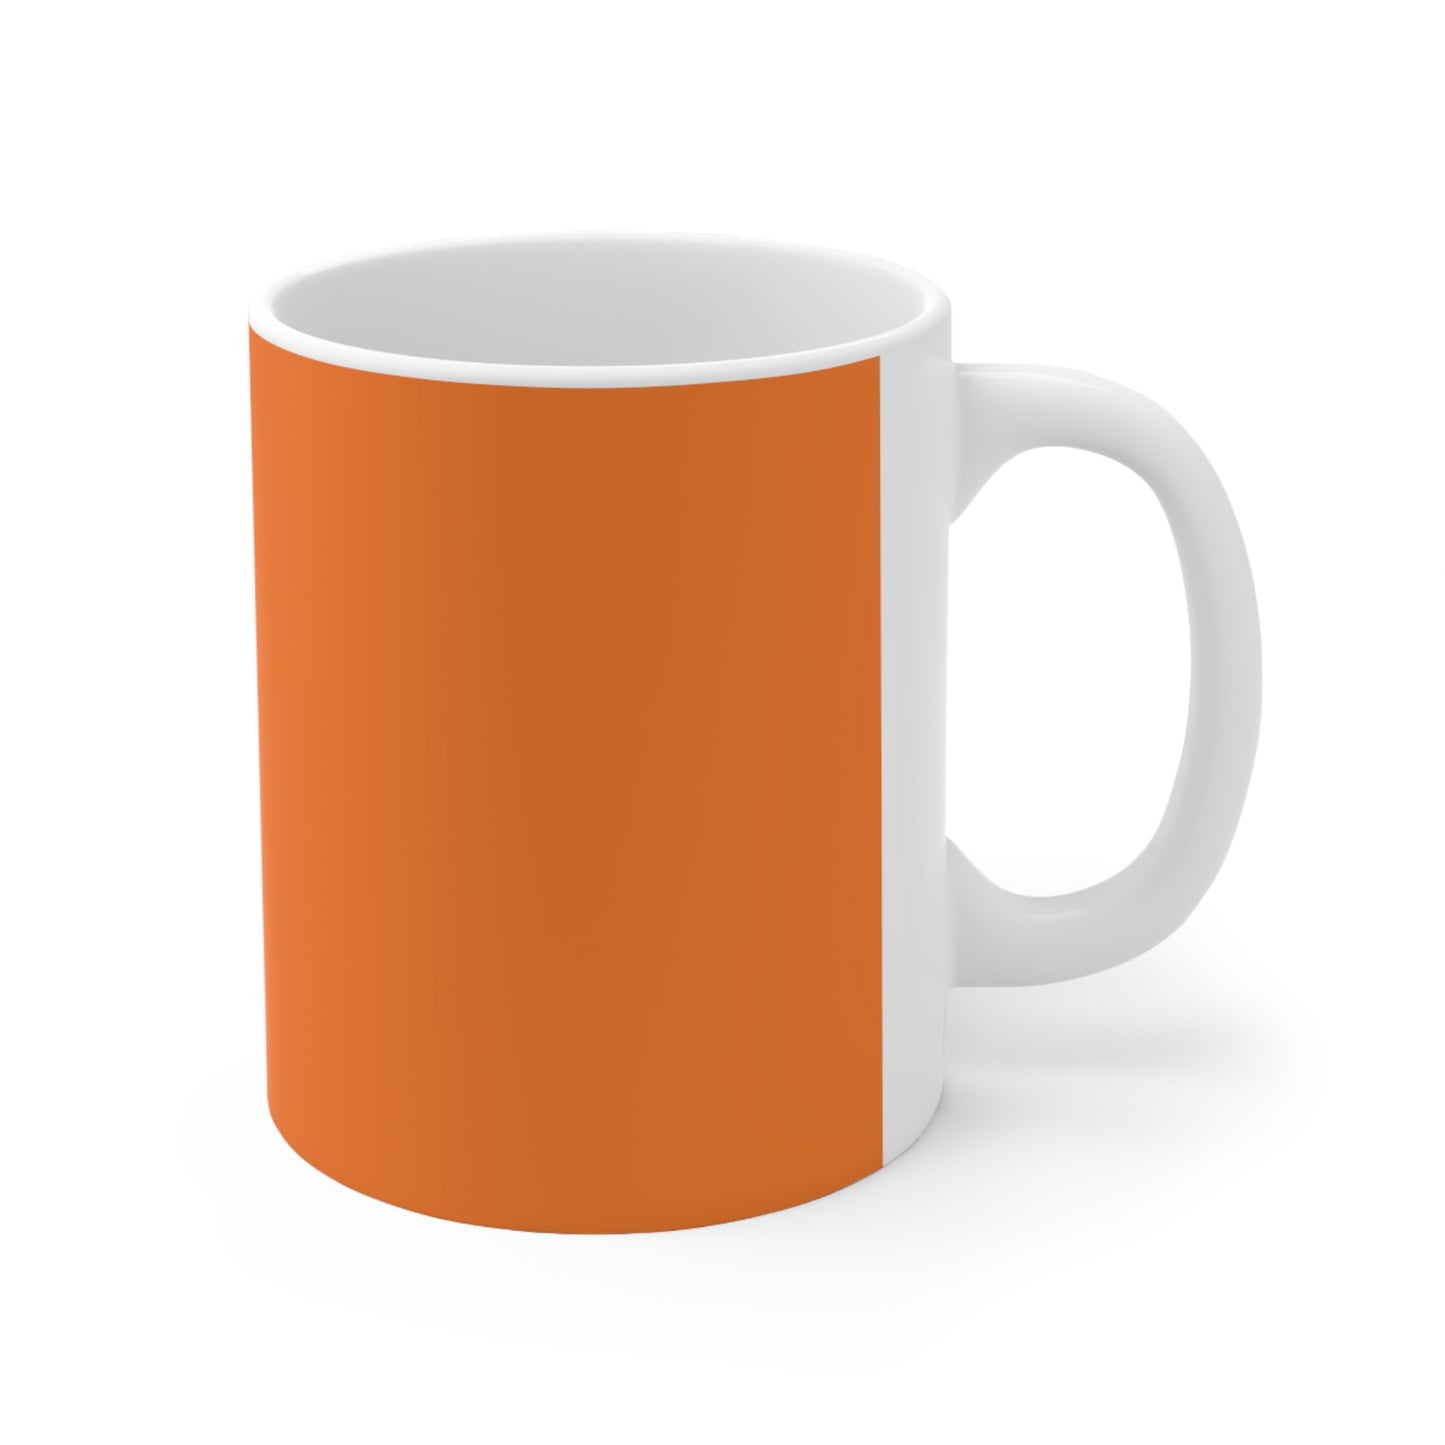 This is nacho cup of tea- Ceramic Mug